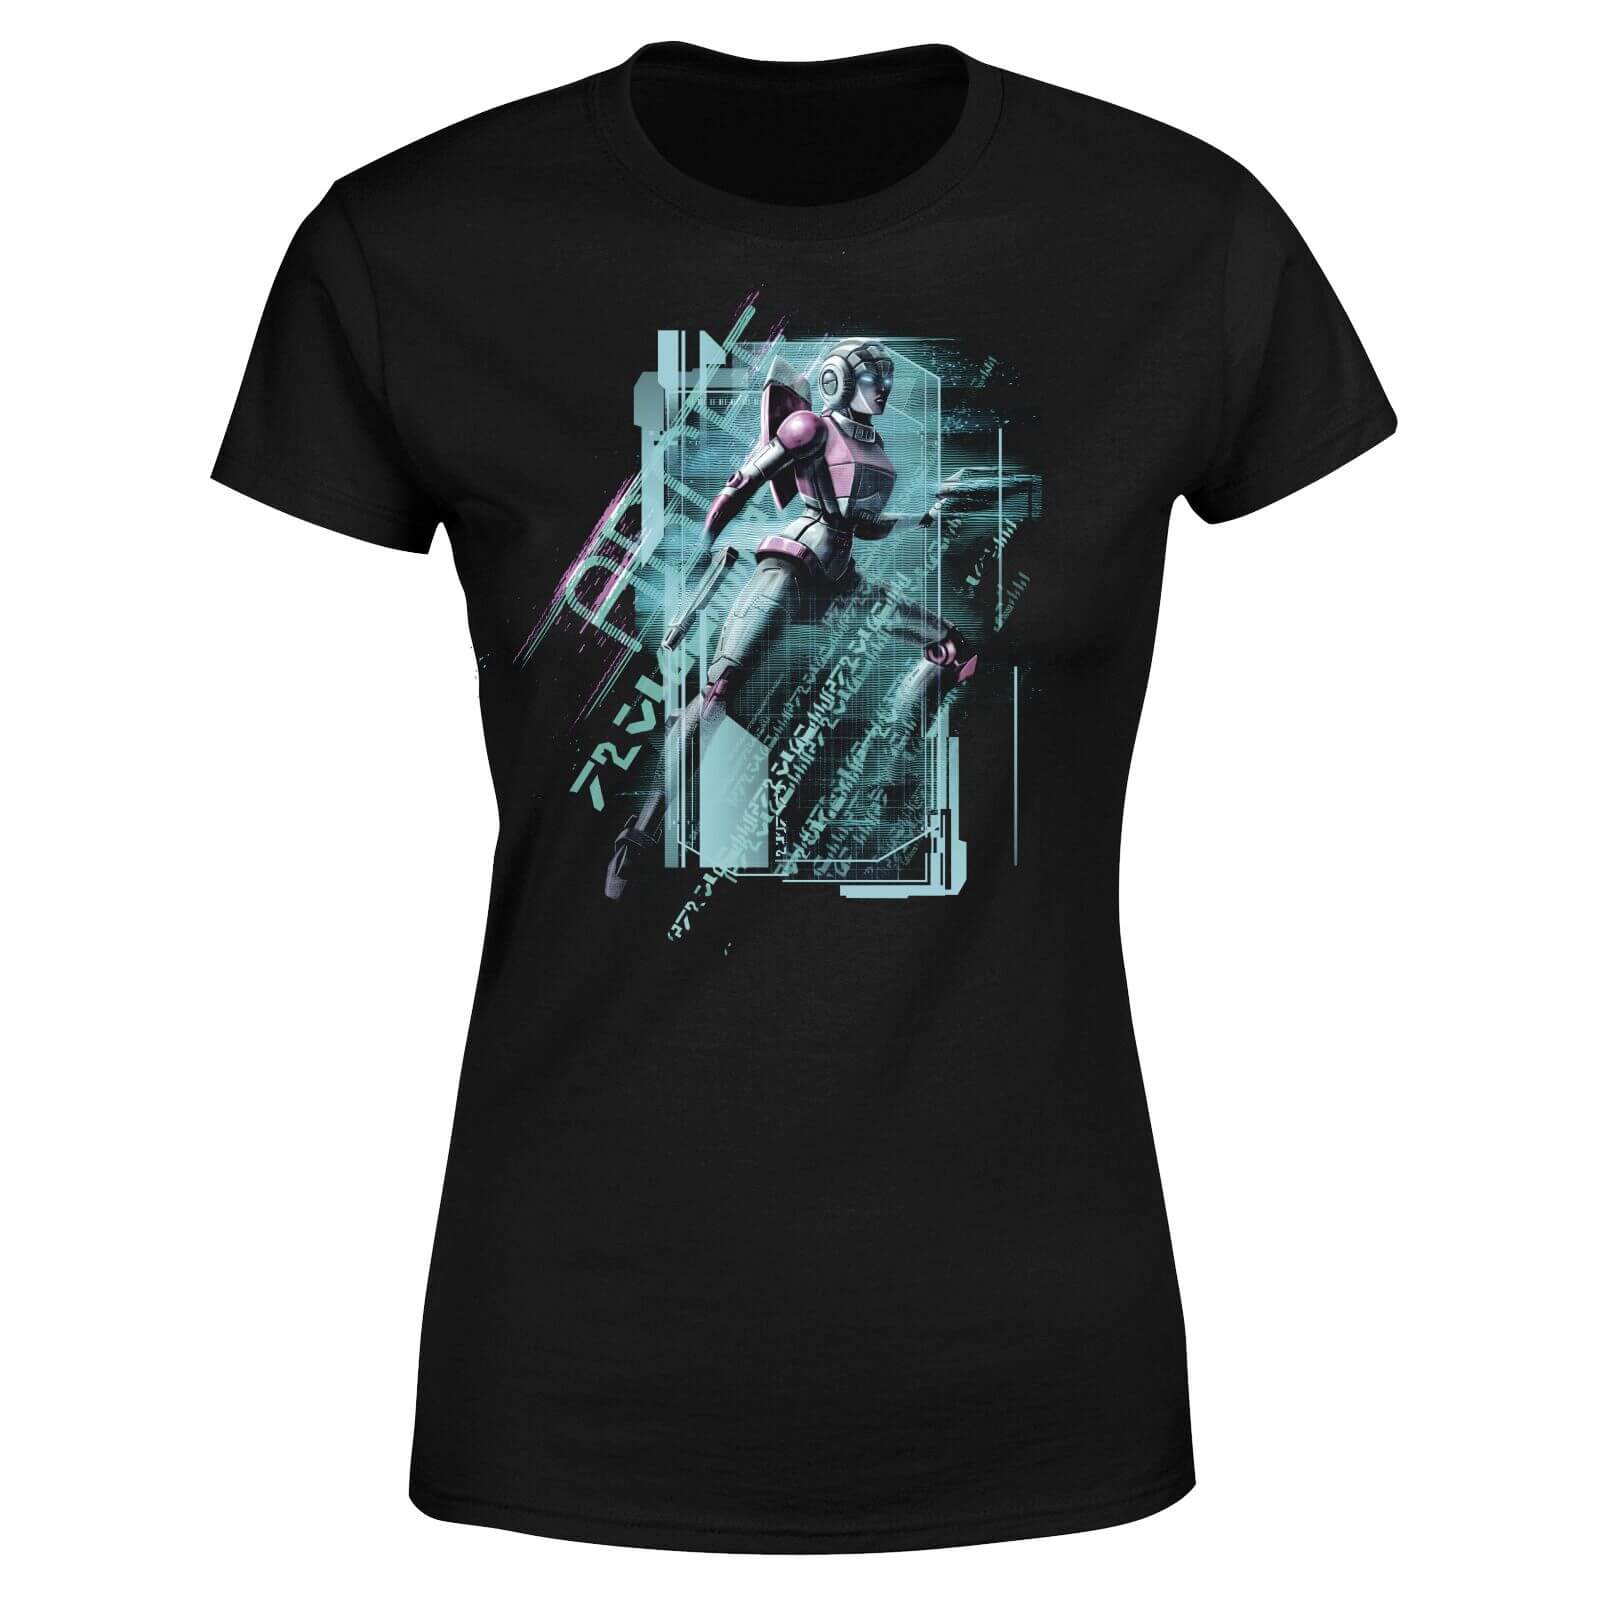 Transformers Arcee Tech Women's T-Shirt - Black - S - Black